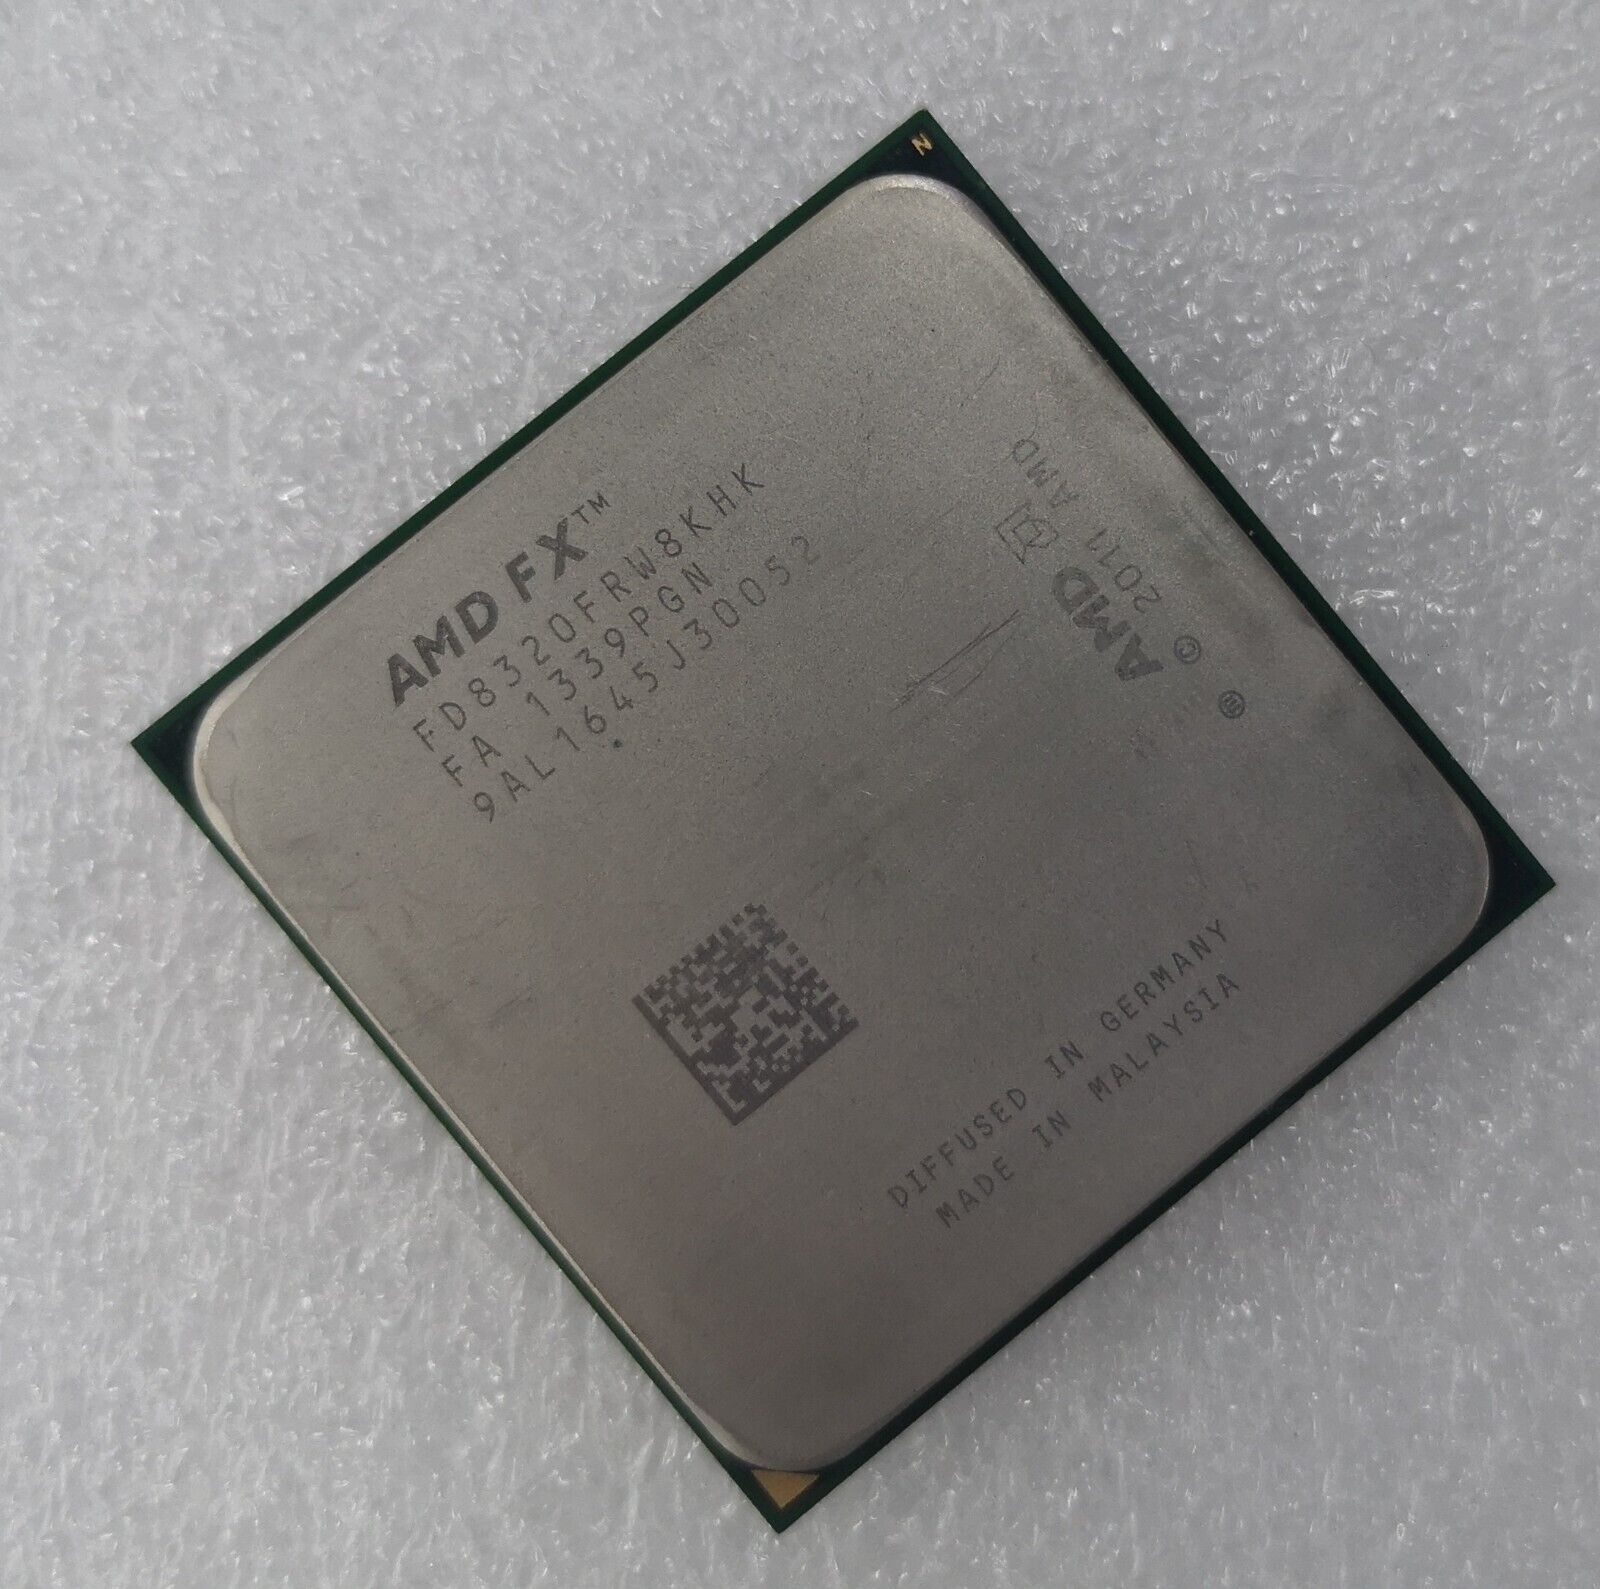 AMD FX-8320 Desktop Processor AM3+ FD8320FRW8KHK 125W Work normally 8 cores